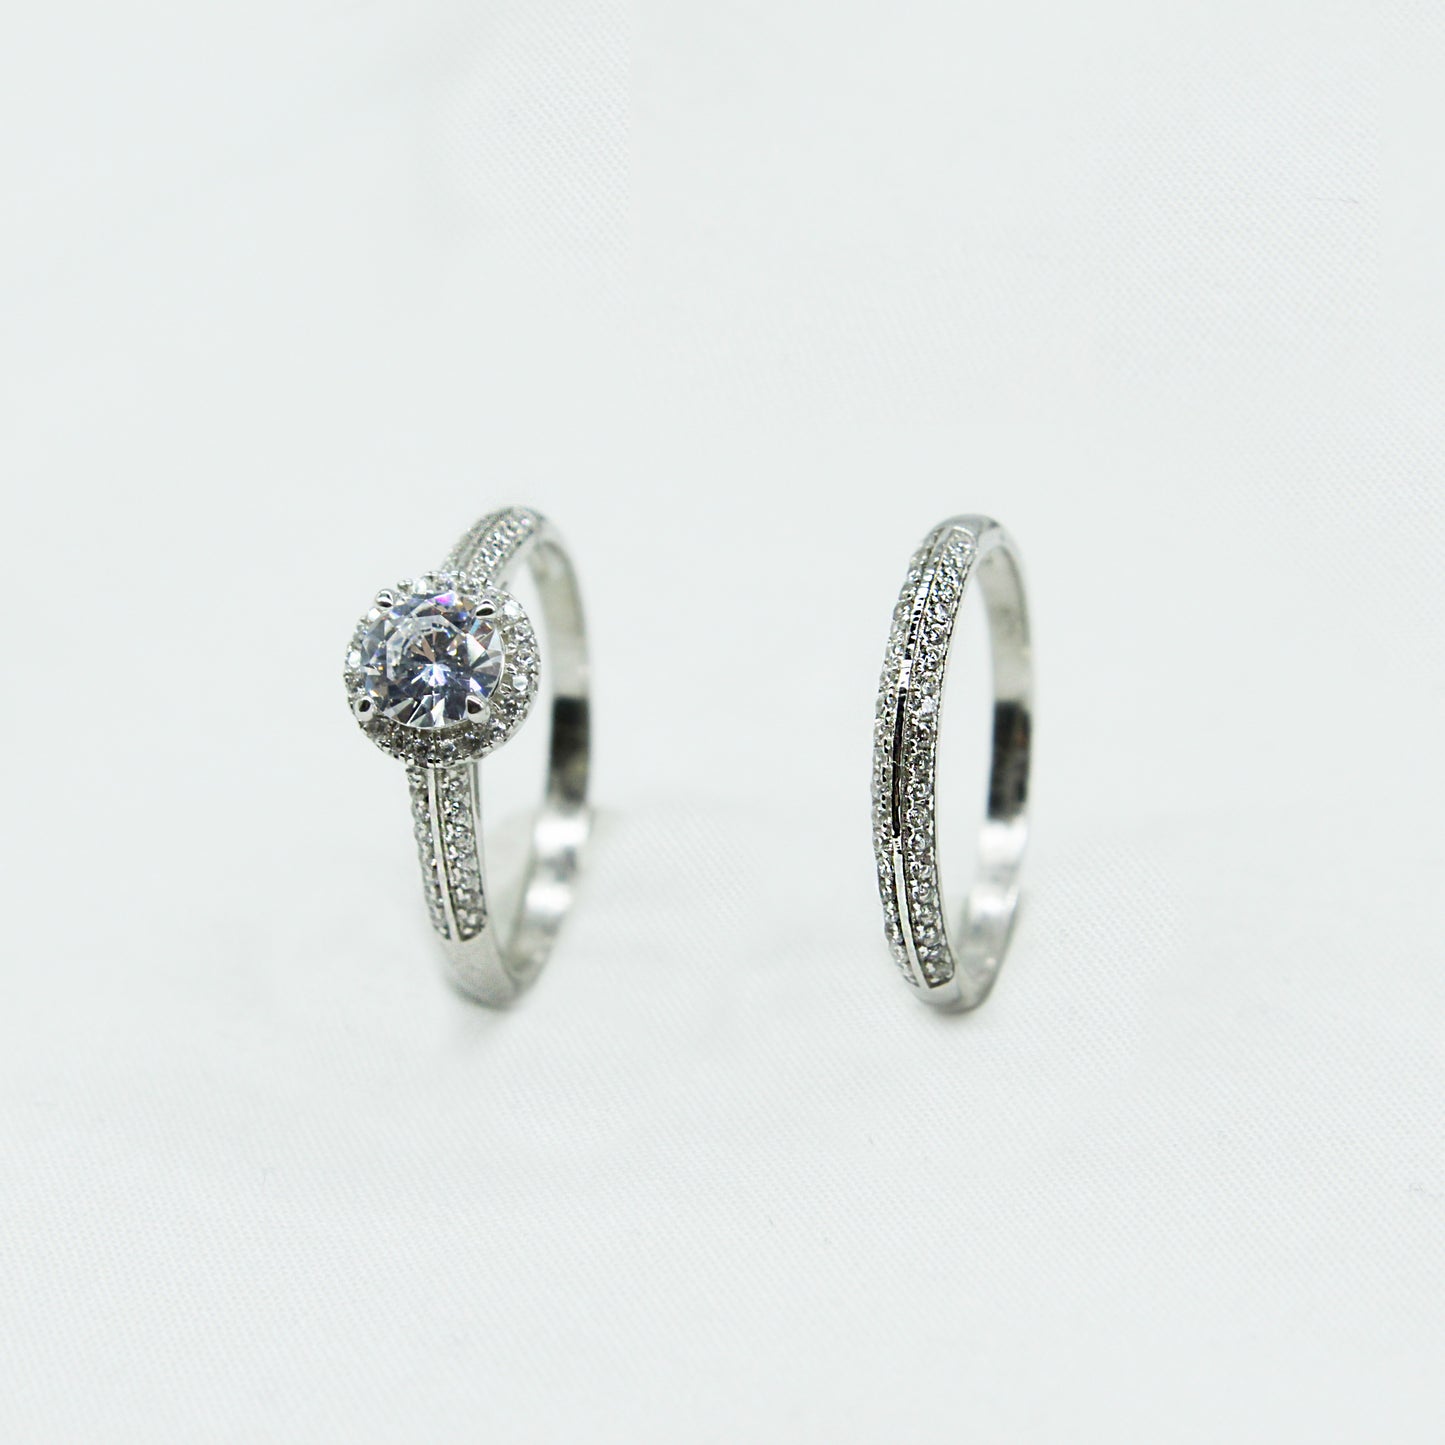 Sparkling Halo Bridal Set Ring in Sterling Silver